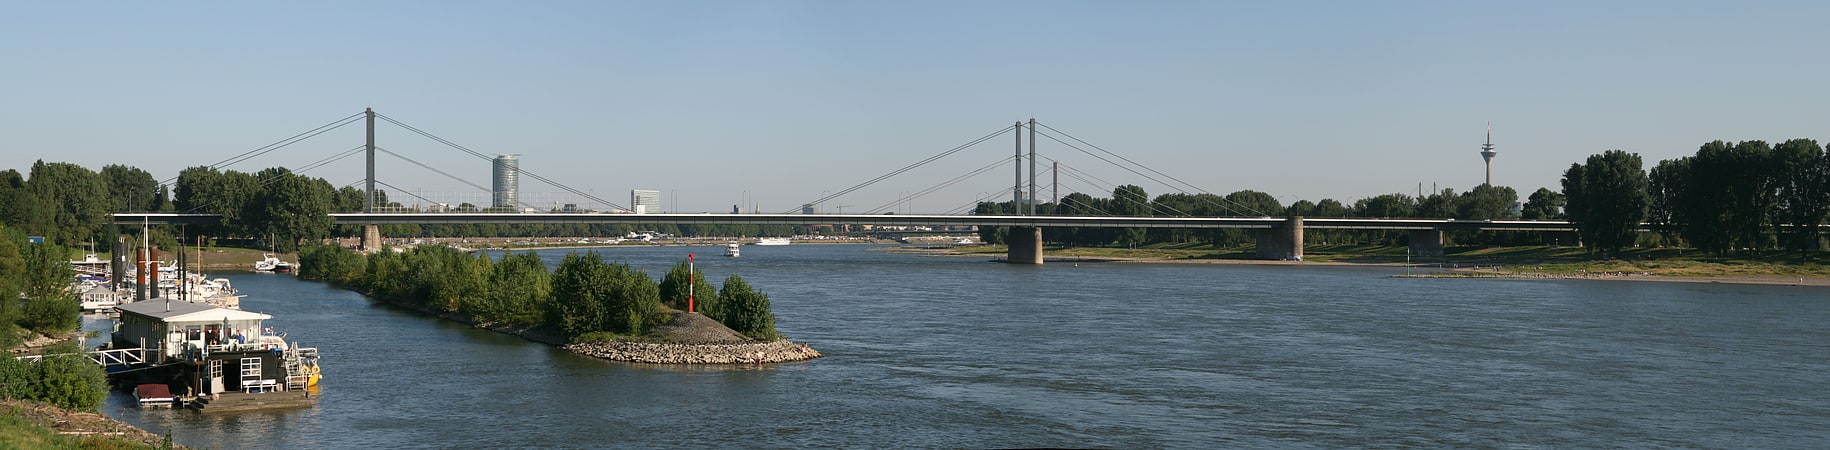 Bridge in Düsseldorf, Germany